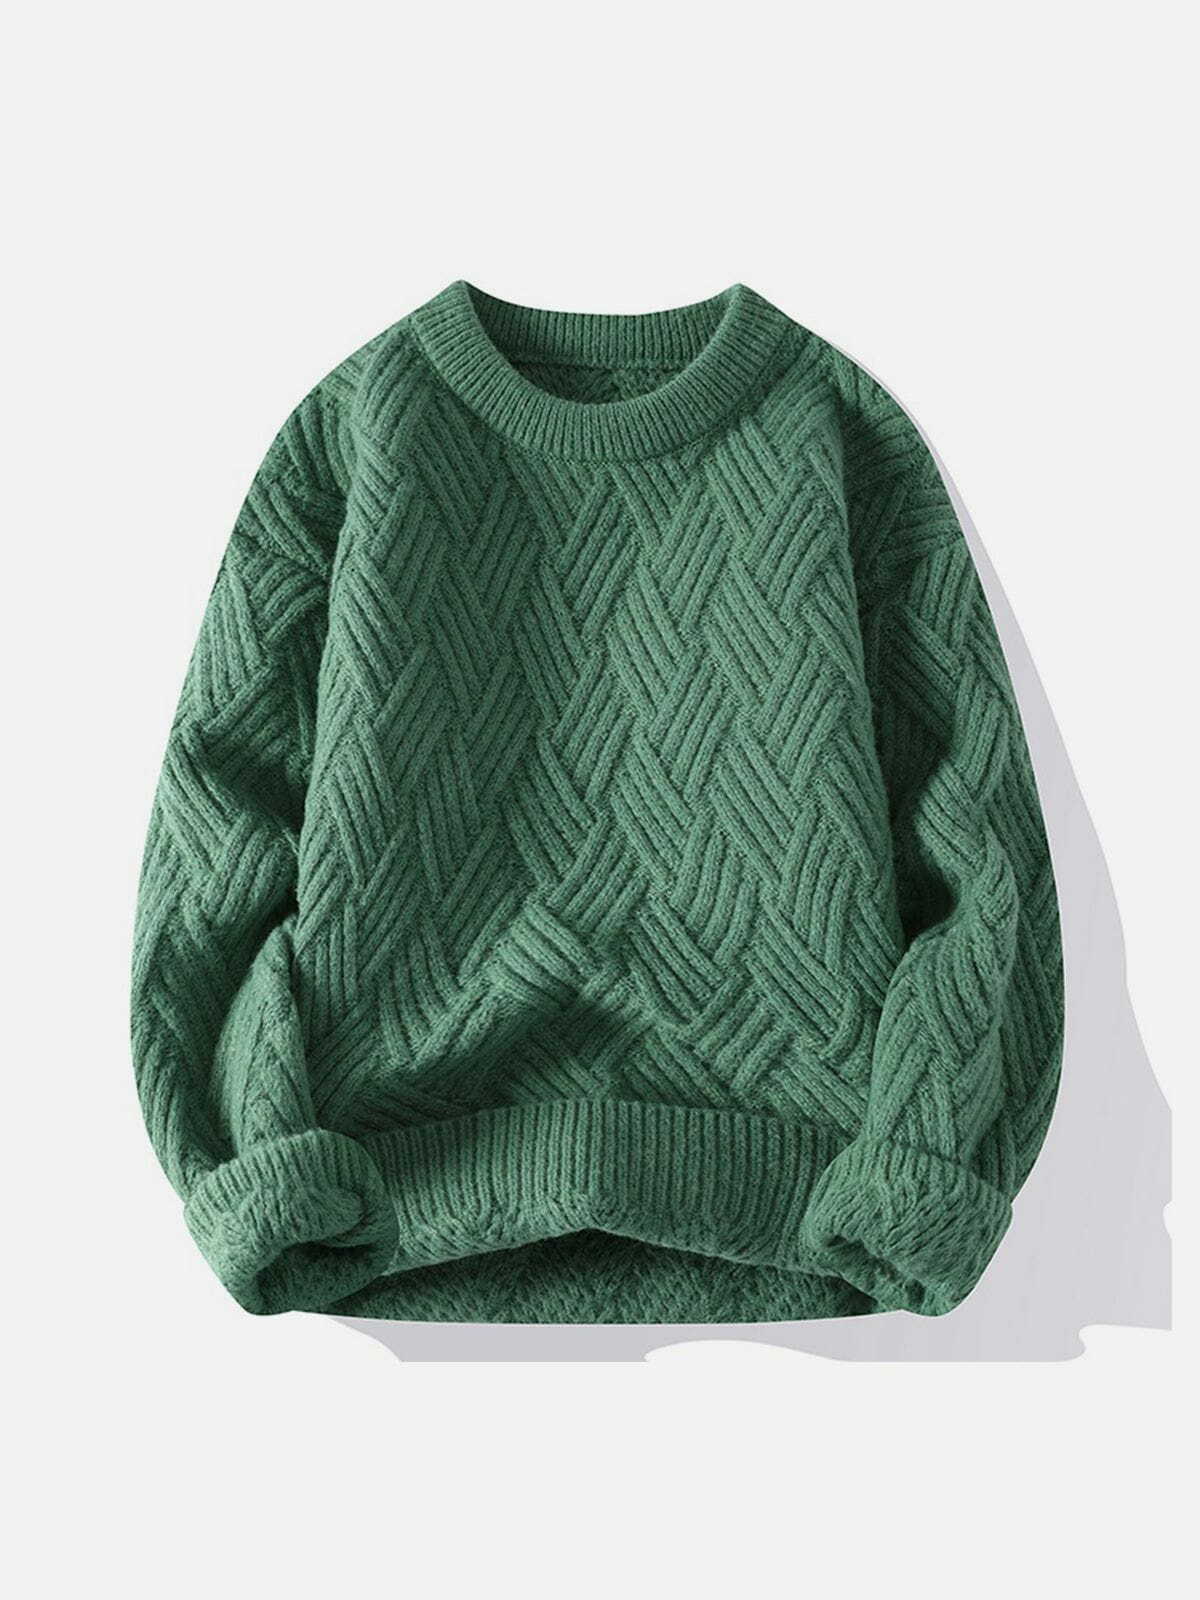 weave texture cozy sweater urban streetwear essential 8239